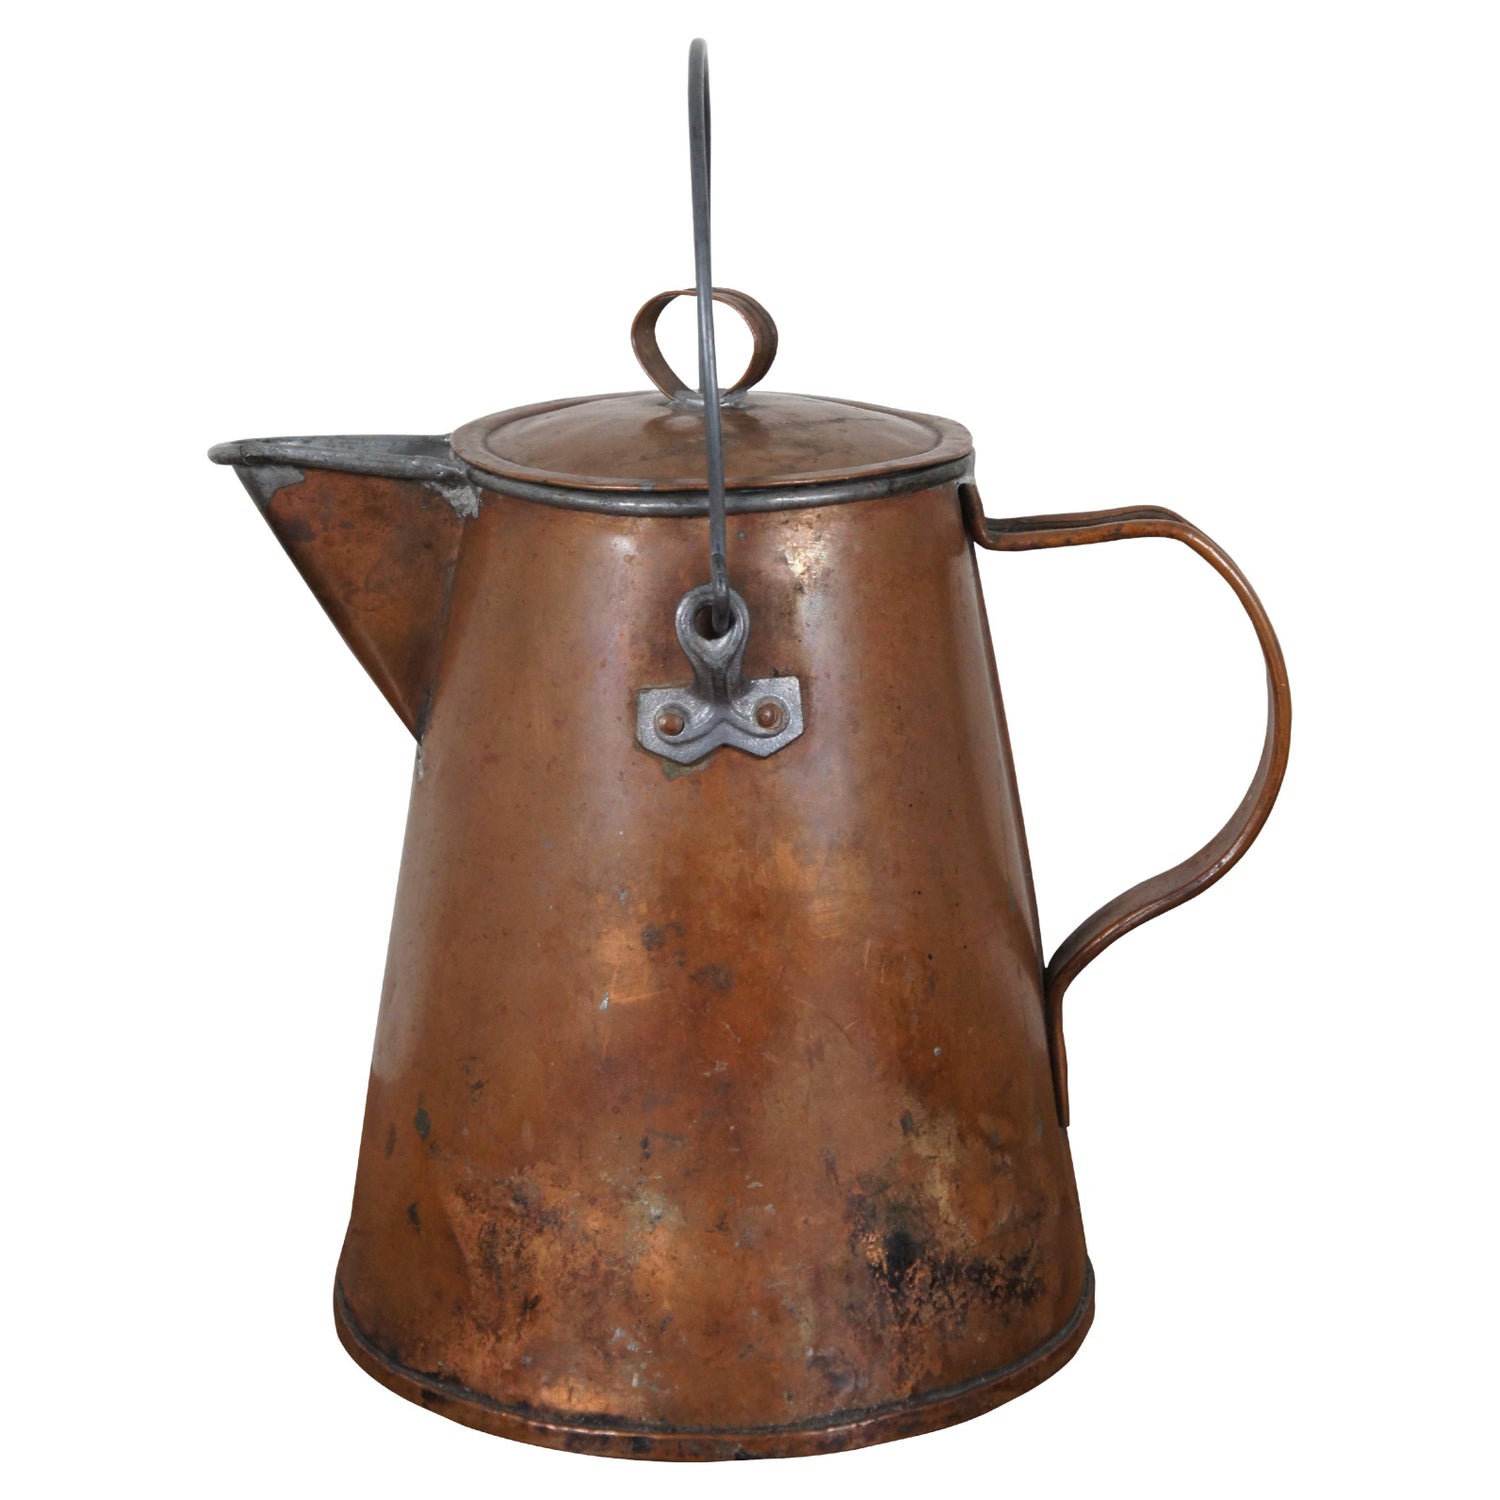 https://a.1stdibscdn.com/primitive-antique-copper-tea-pot-coffee-kettle-cowboy-farmhouse-teapot-11-for-sale/f_53432/f_374461621701944435020/f_37446162_1701944436416_bg_processed.jpg?width=1500